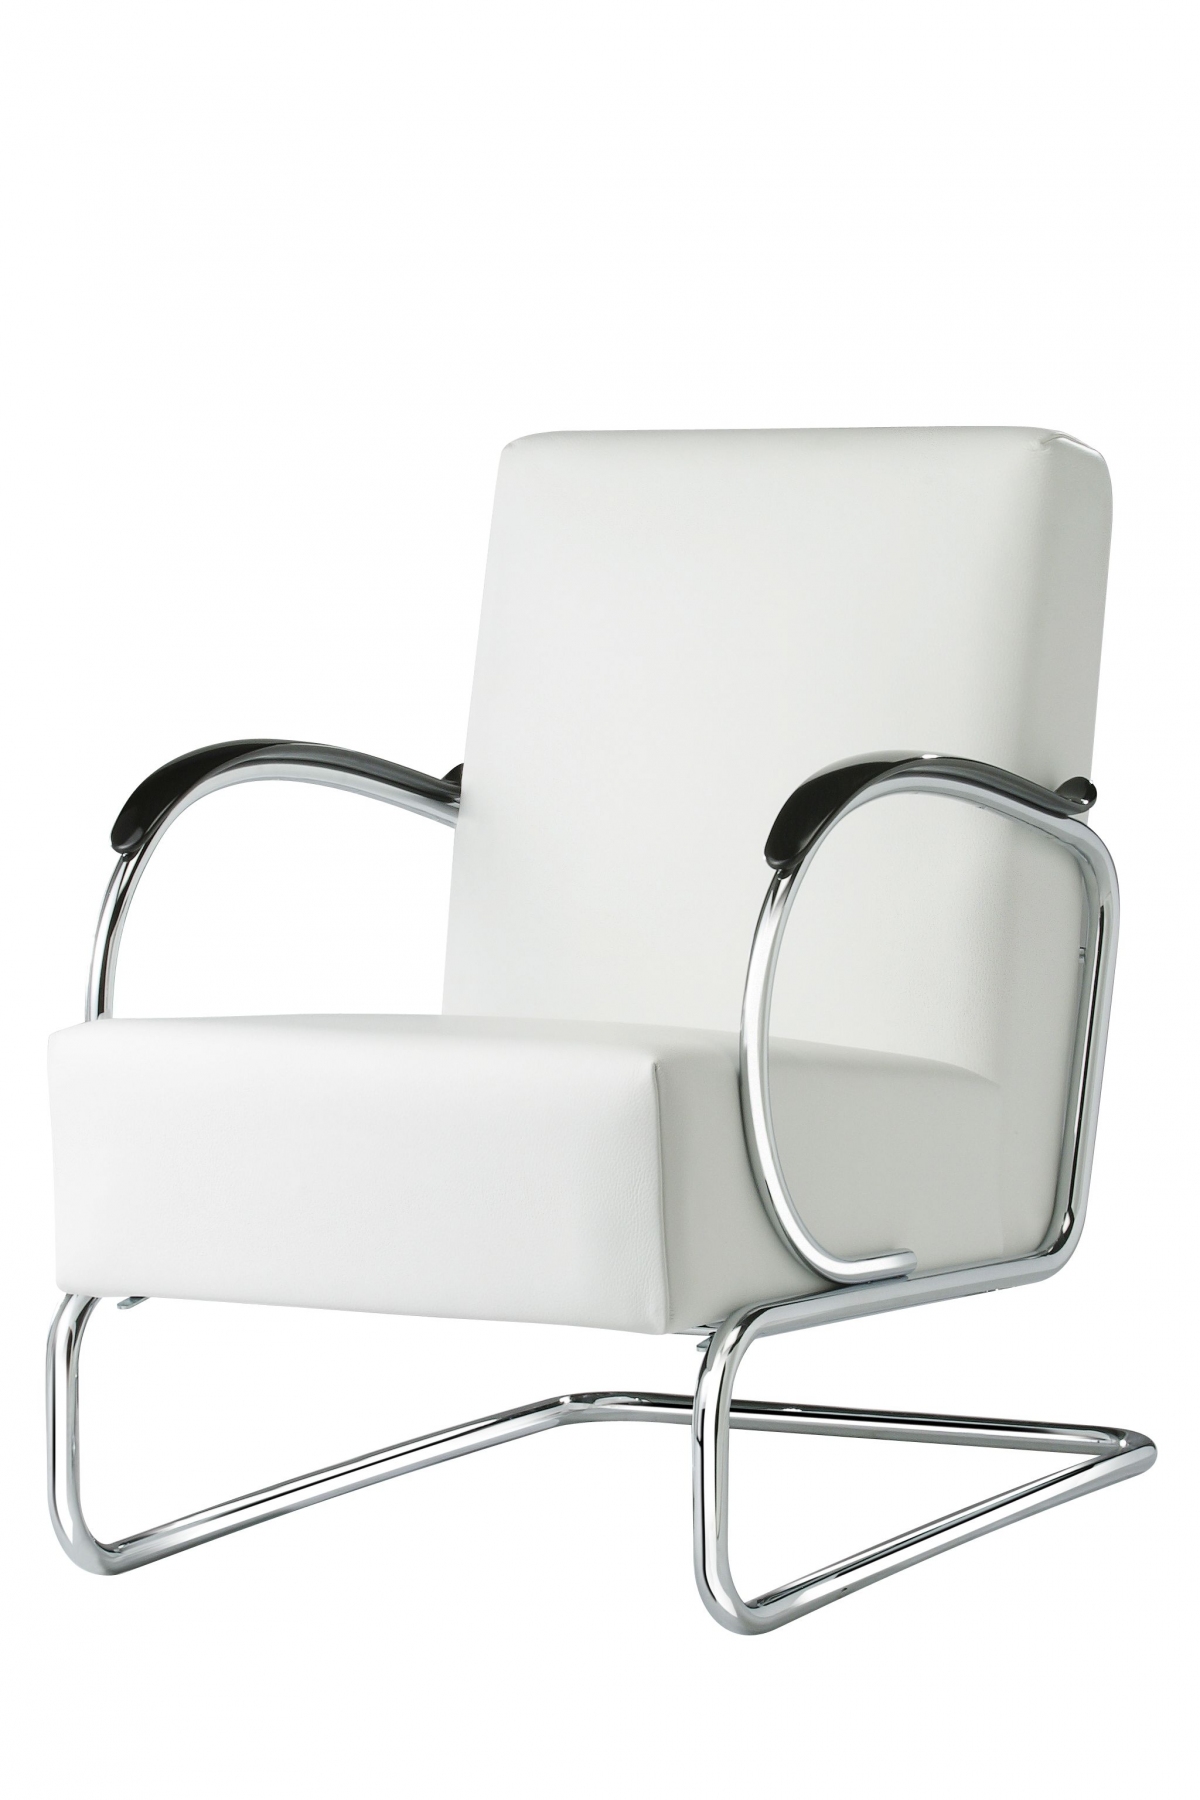 Gispen 407 fauteuil Originals" | Hulshoff Centers